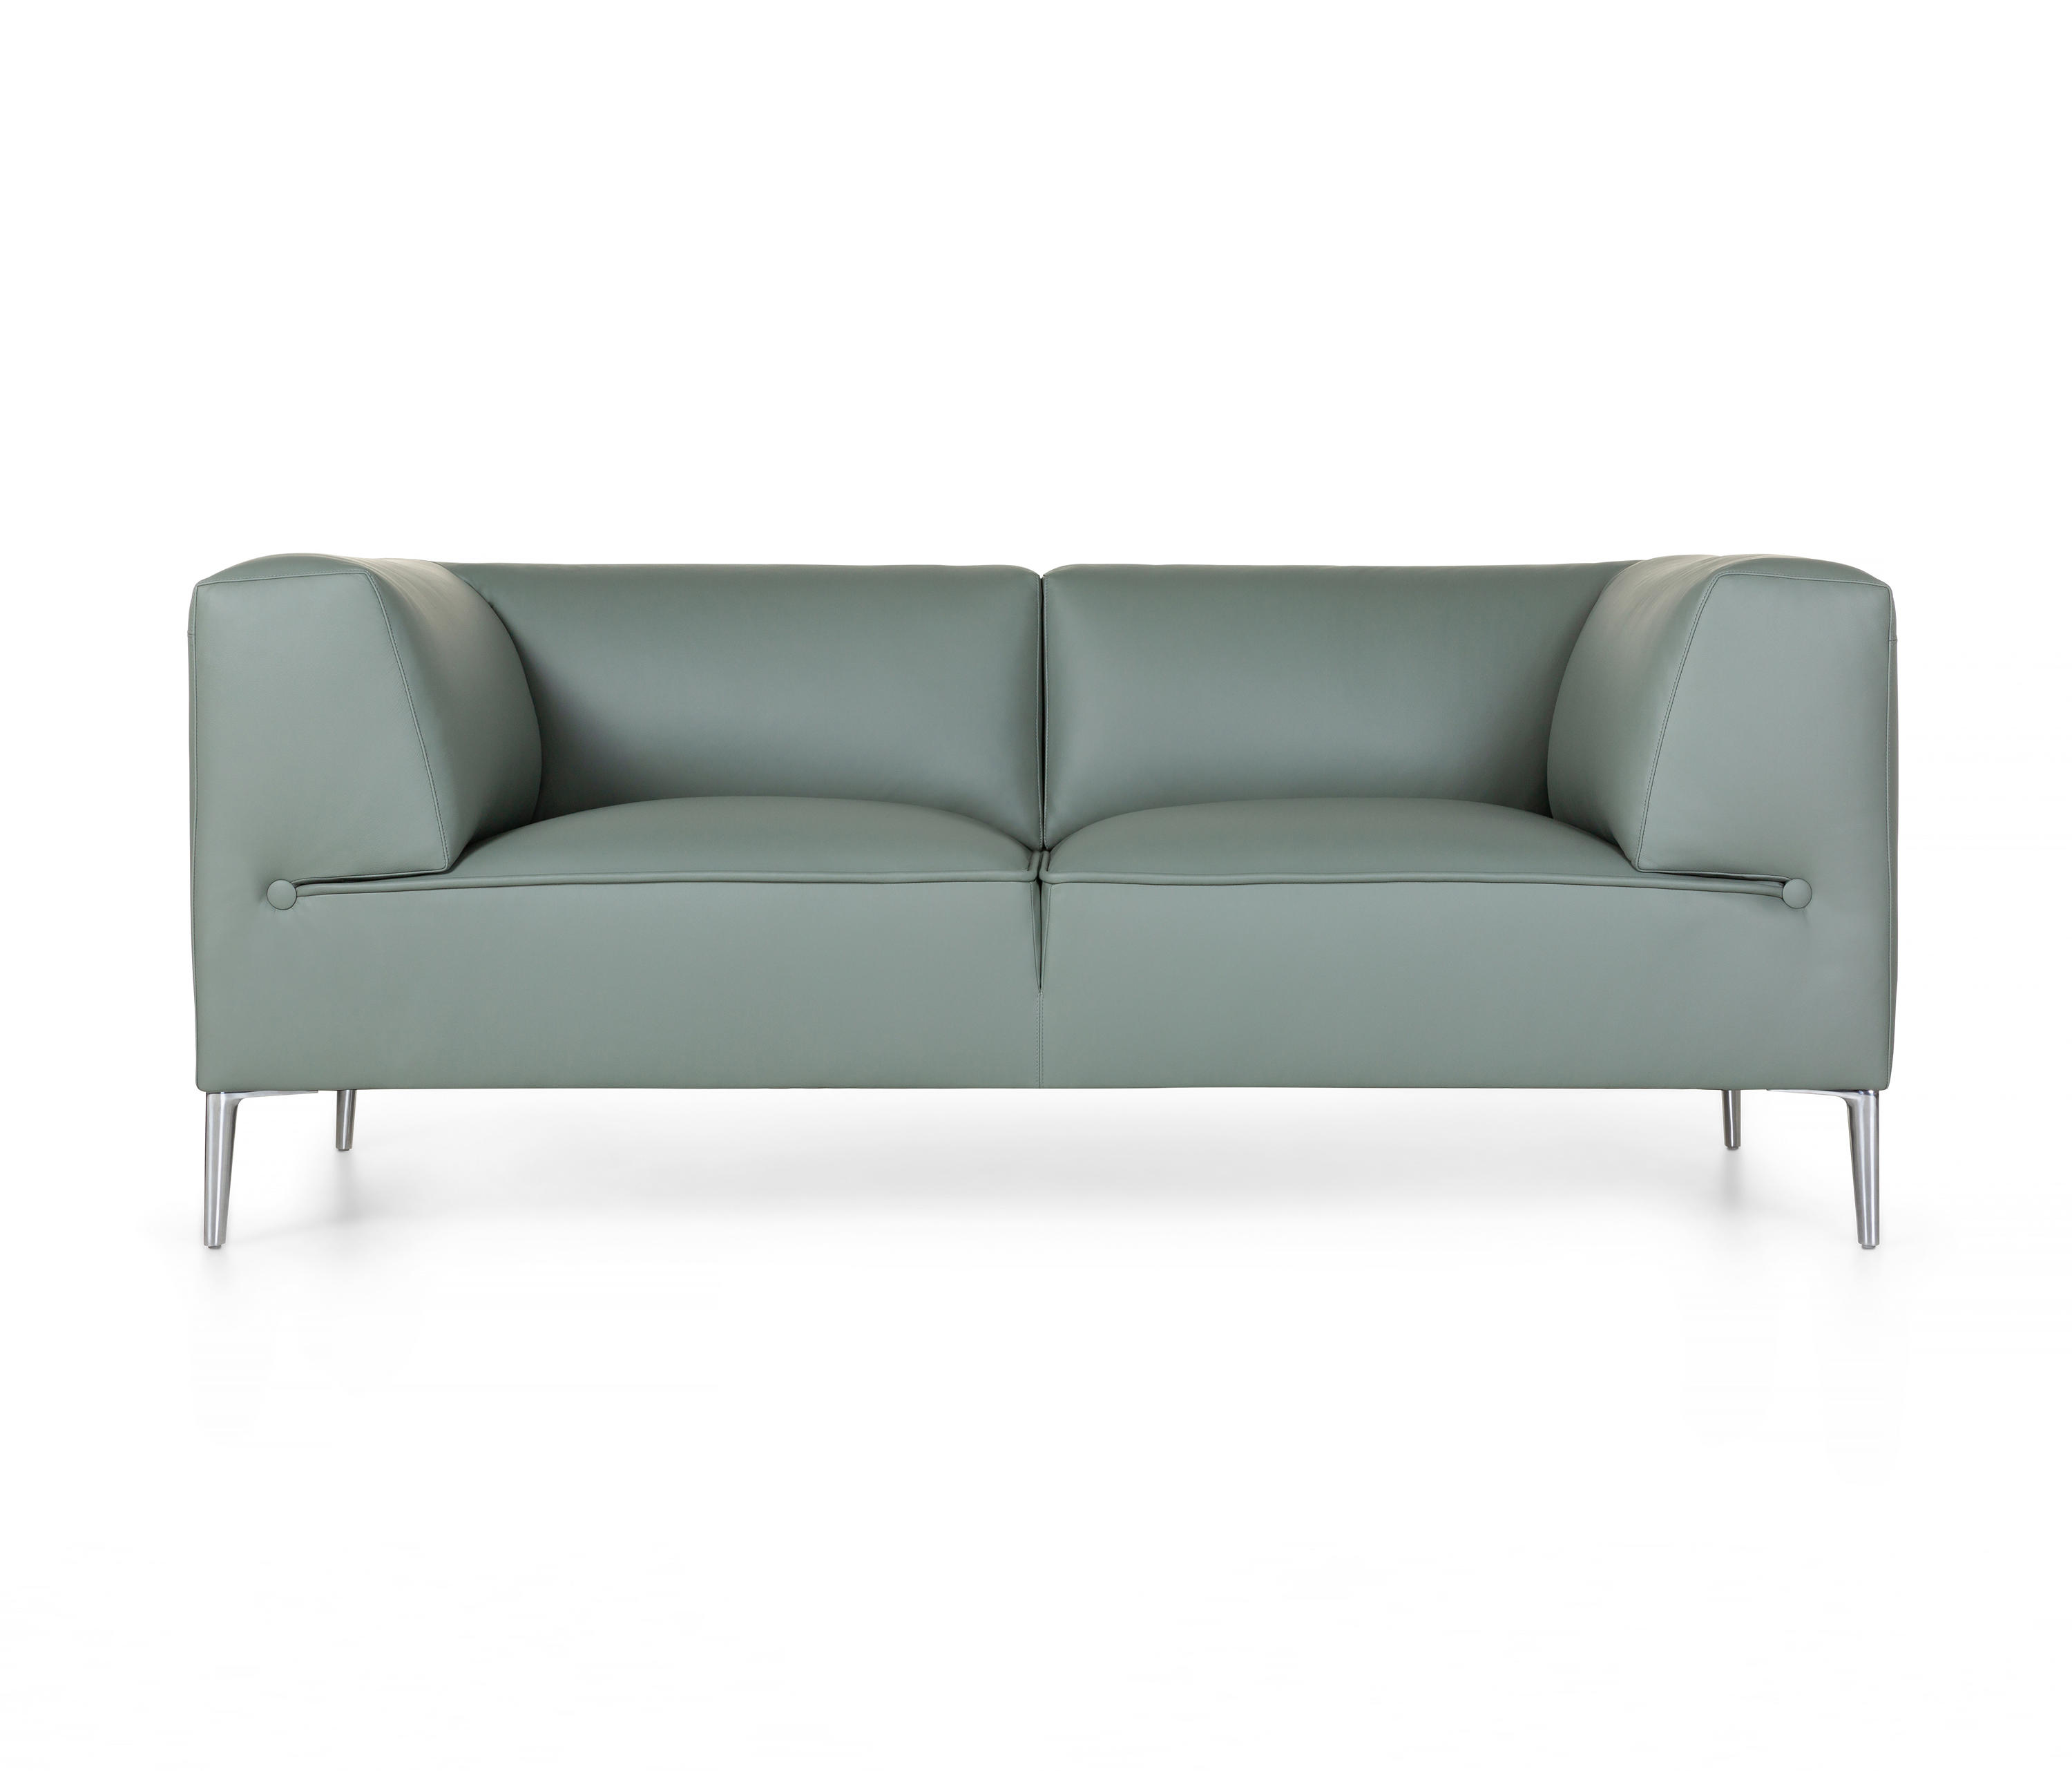 zeemijl Hectare Spektakel Sofa So Good - Doube Seat | Architonic